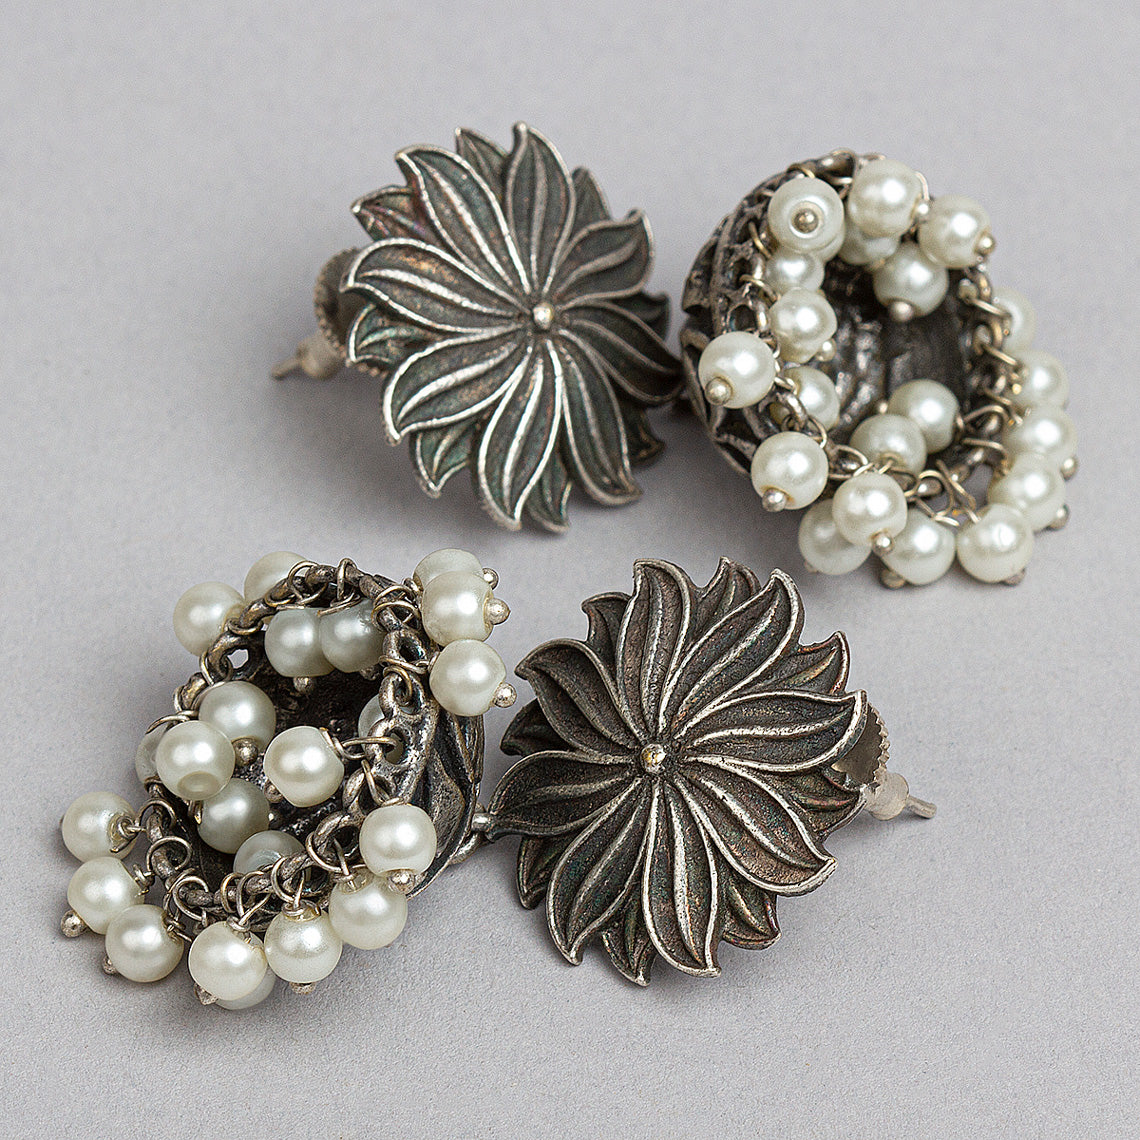 bindhani pearls beads oxidised jhumki earrings for women girls